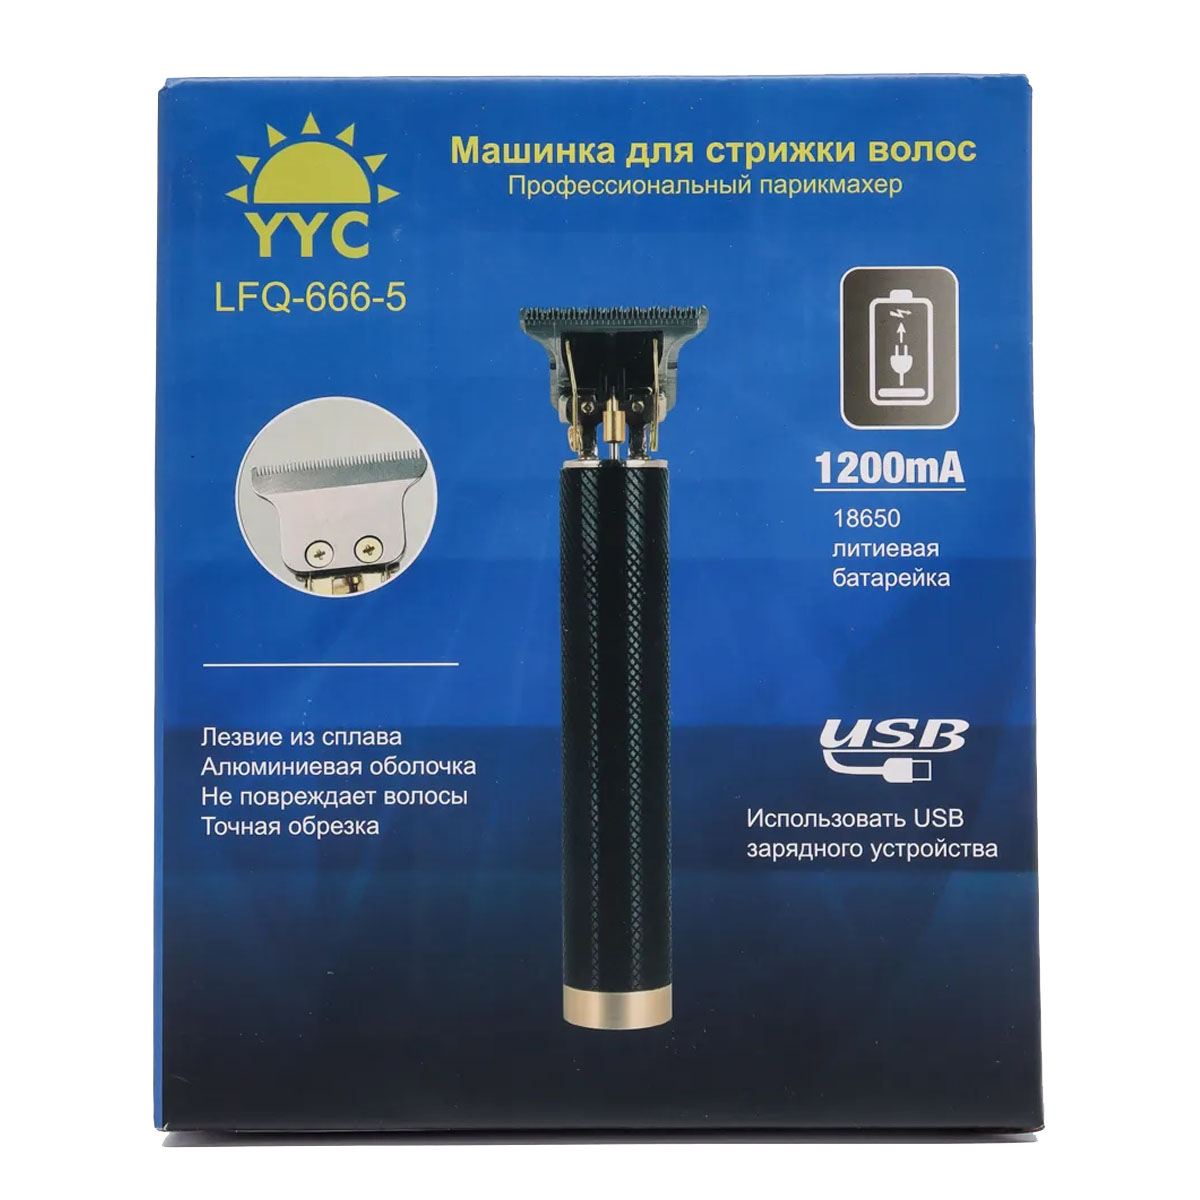 Триммер YYC LFQ-666-5, машинка для стрижки волос, бороды, усов